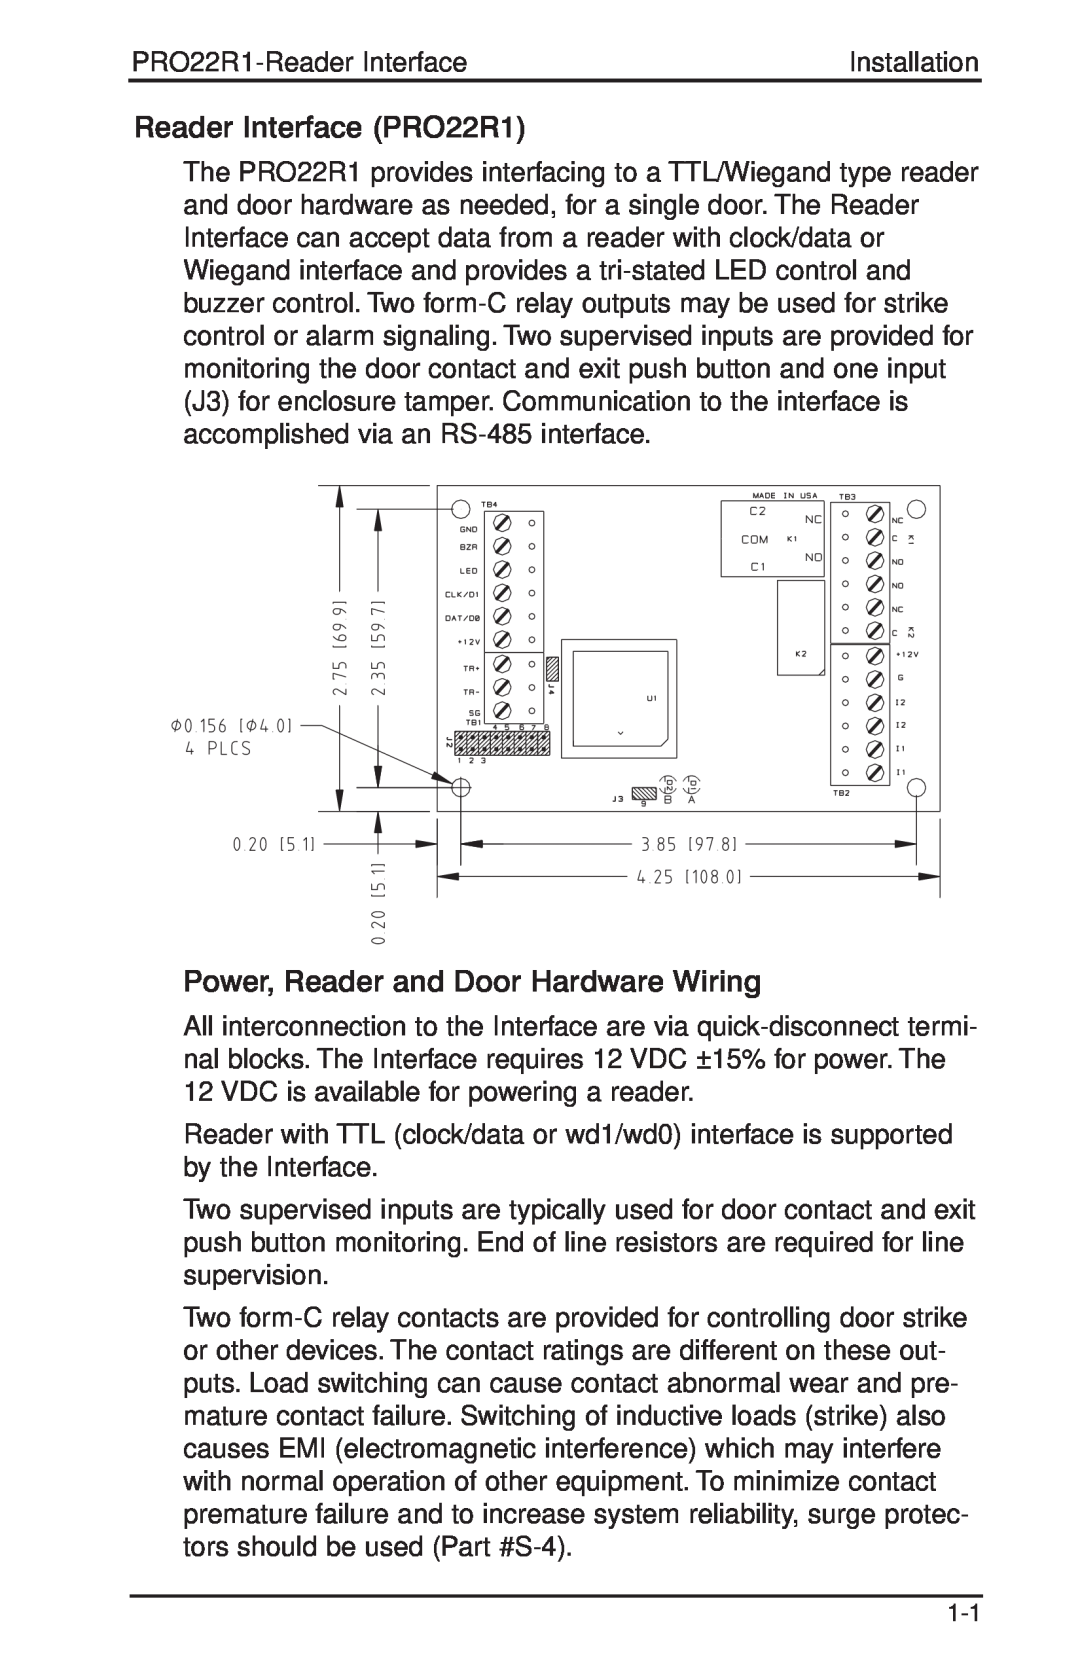 Honeywell PRO-2200 installation manual Reader Interface PRO22R1, Power, Reader and Door Hardware Wiring 